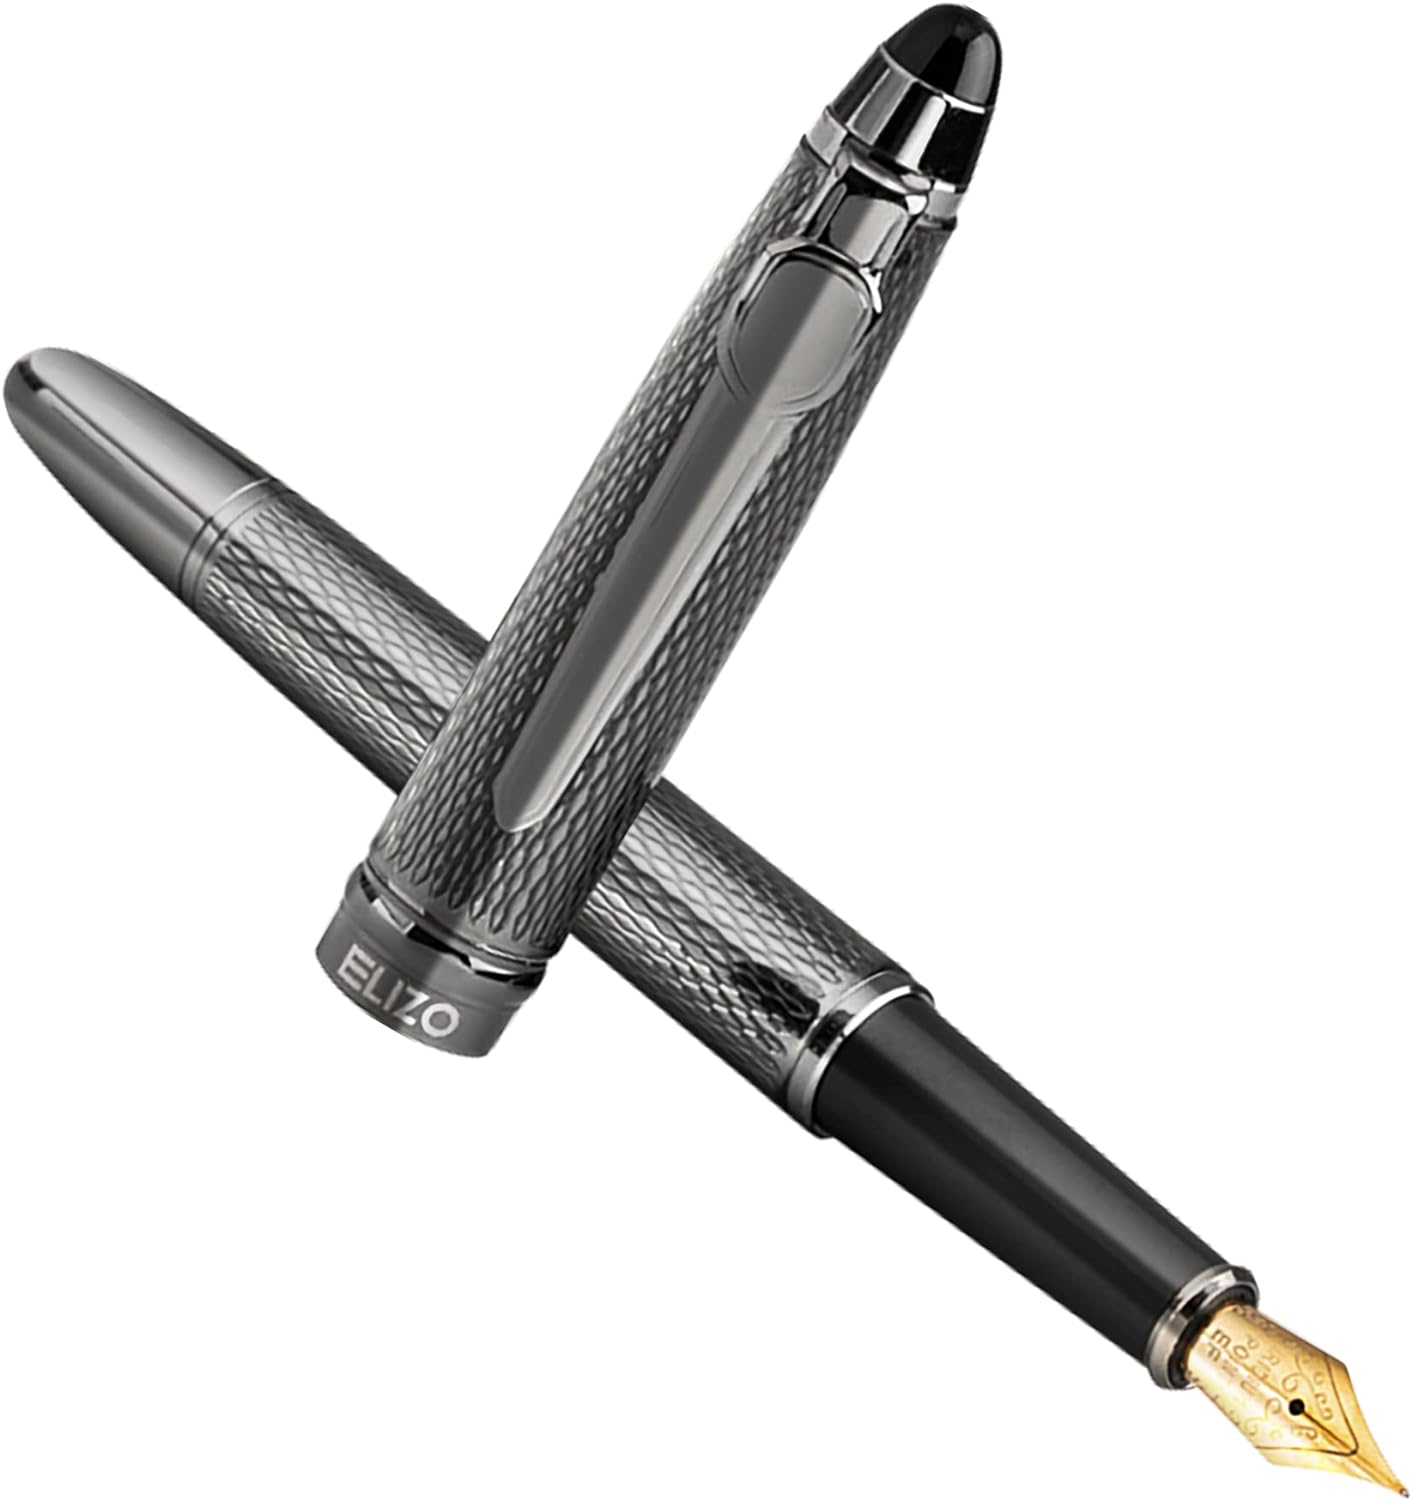 Executive Office Schmidt 18K Gilded Nib Nice Pens Professional Best Pen Gift Set for Men & Women Silver Chrome Fountain Pen Scriveiner Stunning Luxury Pen with 24K Gold Finish Broad